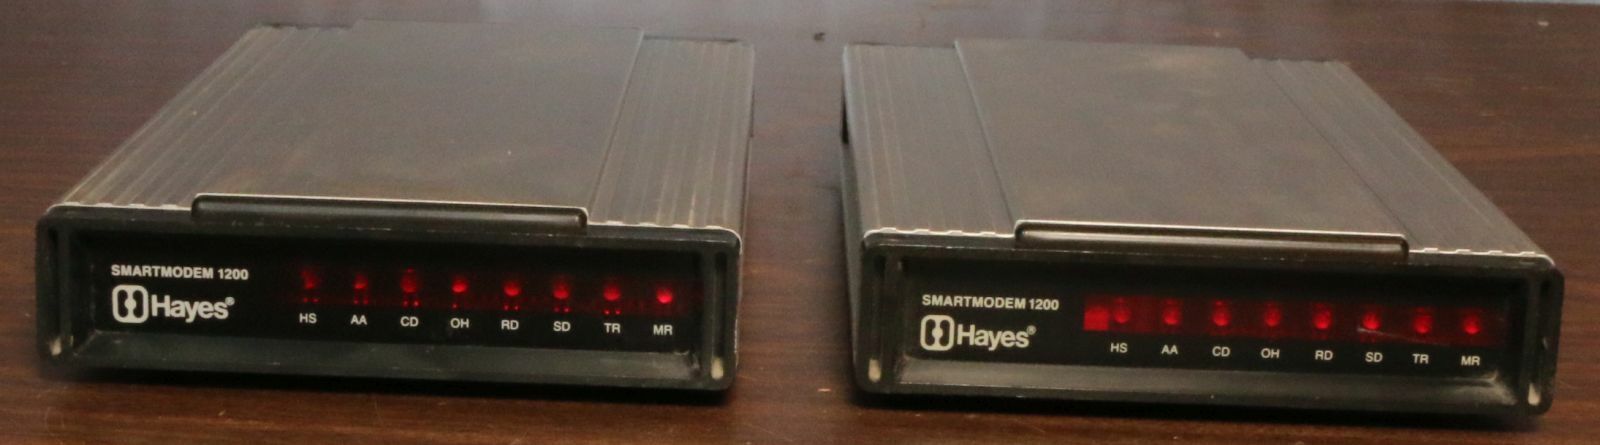 Hayes Smartmodem 1200 Vintage Modem